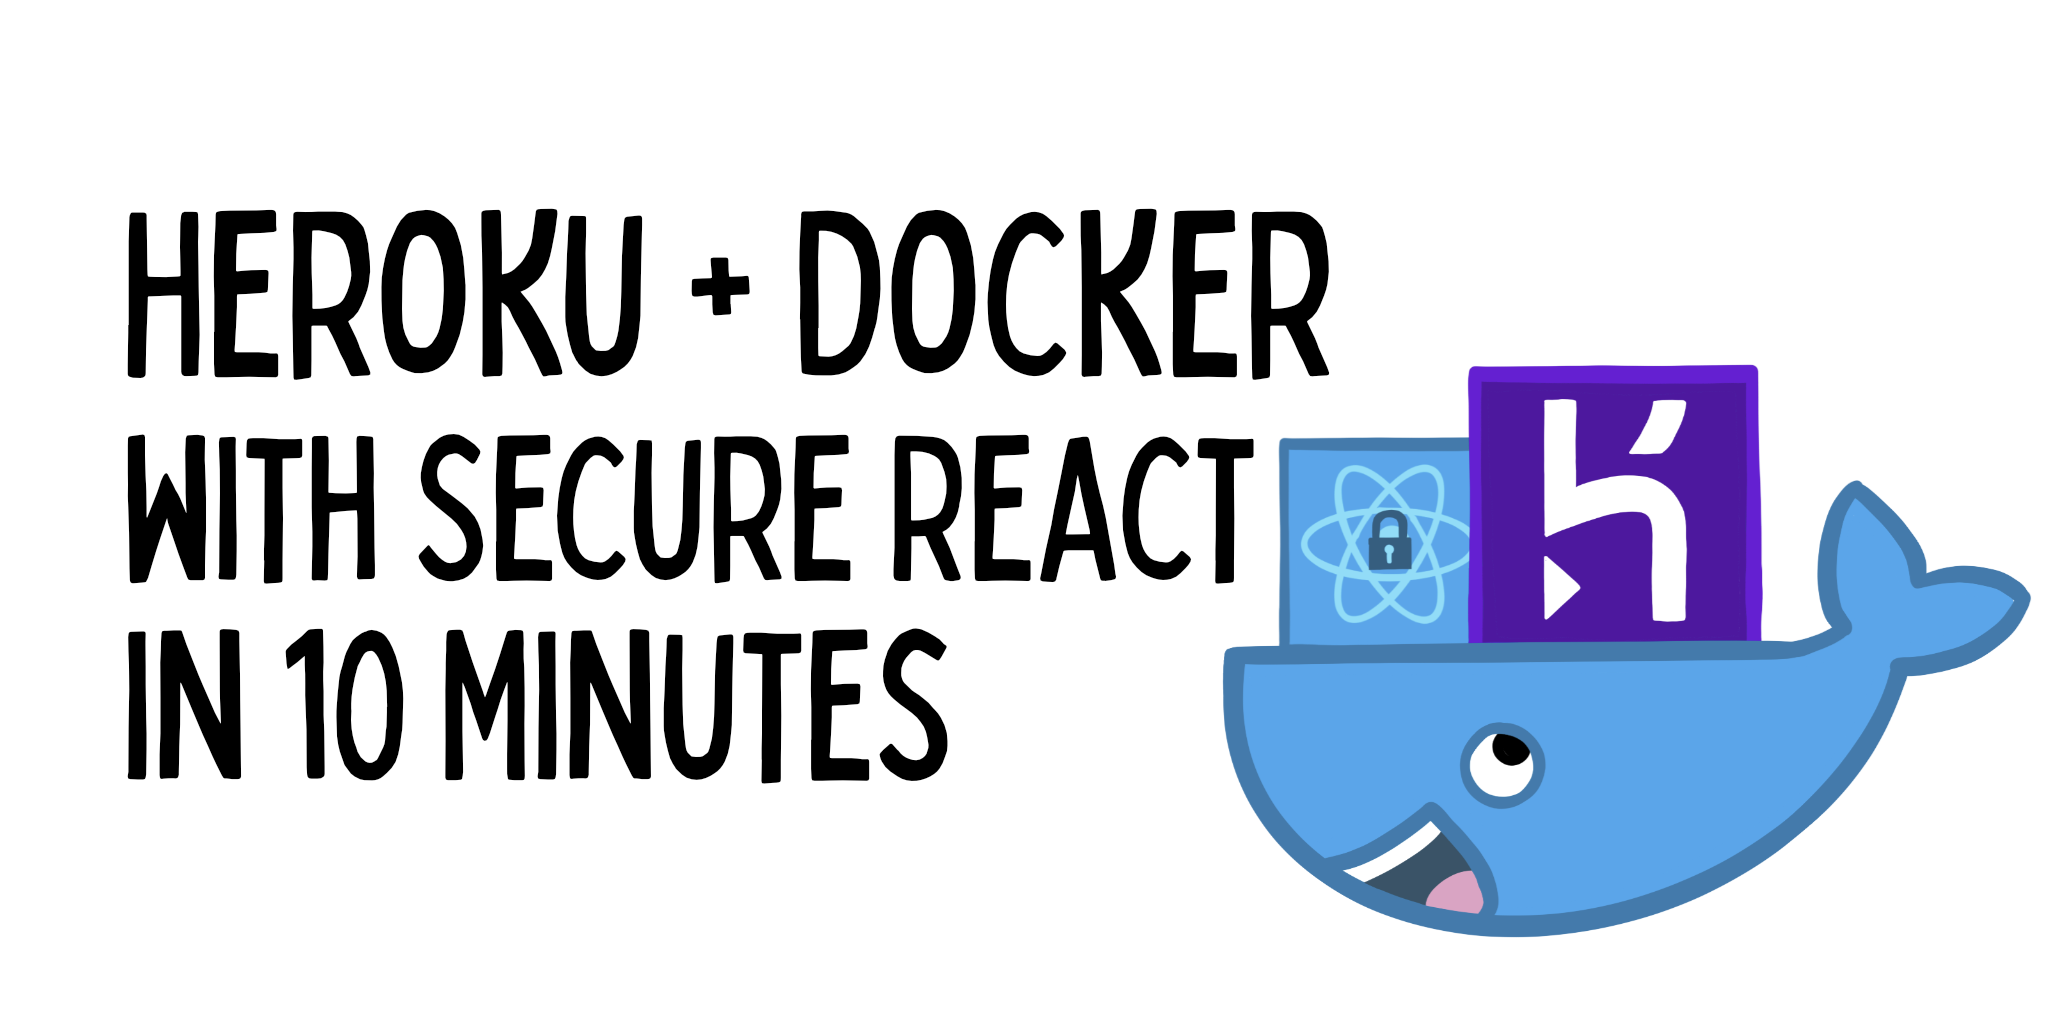 Heroku + Docker with Secure React in 20 Minutes   Okta Developer